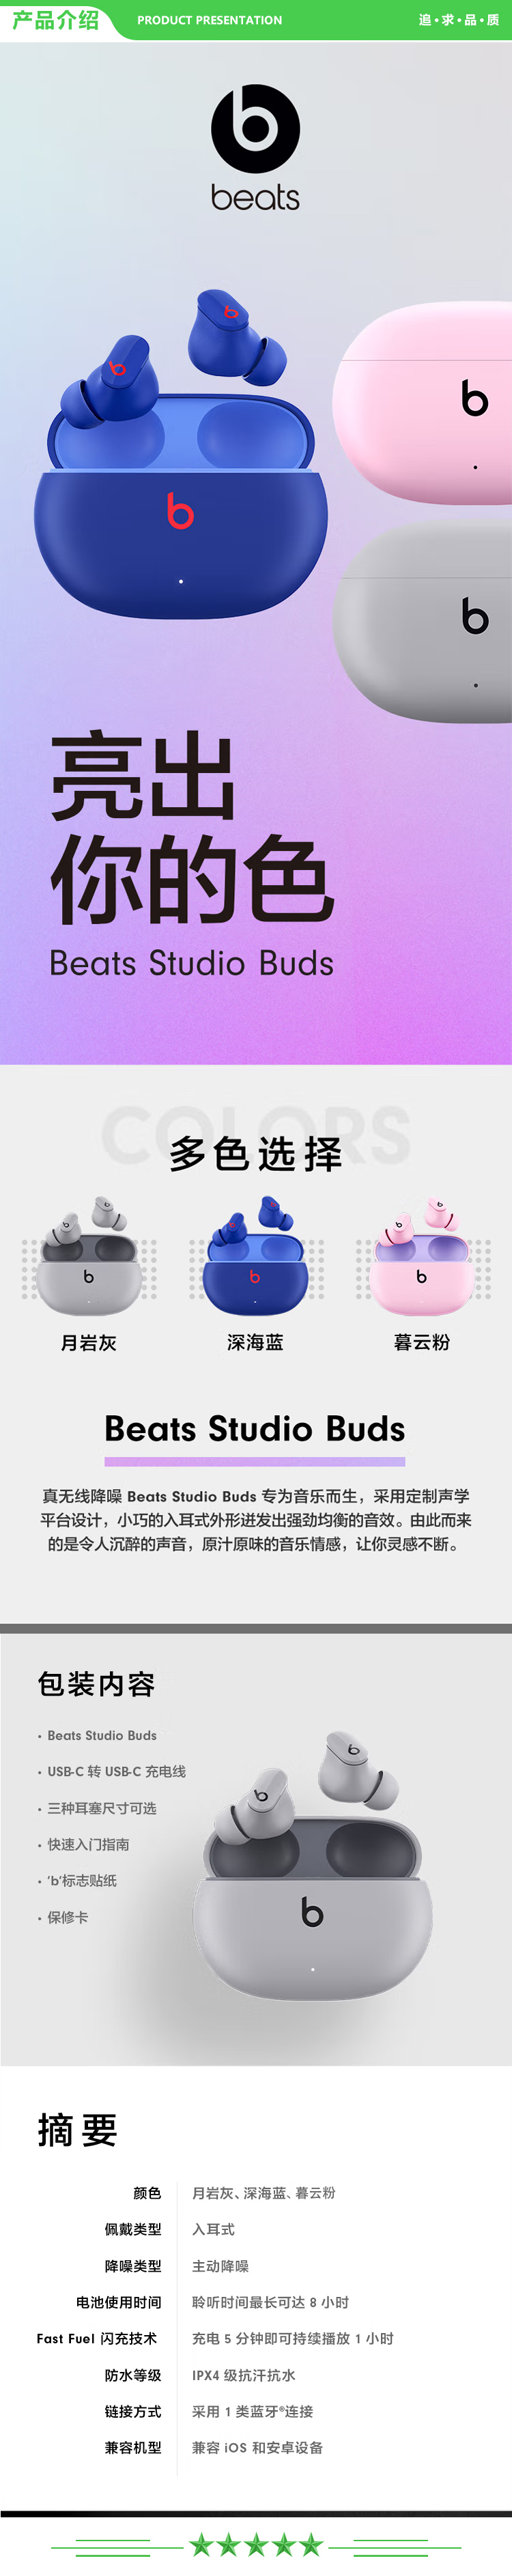 Beats Studio Buds 深海蓝 真无线降噪耳机 蓝牙耳机 兼容苹果安卓系统 IPX4级防水 .jpg